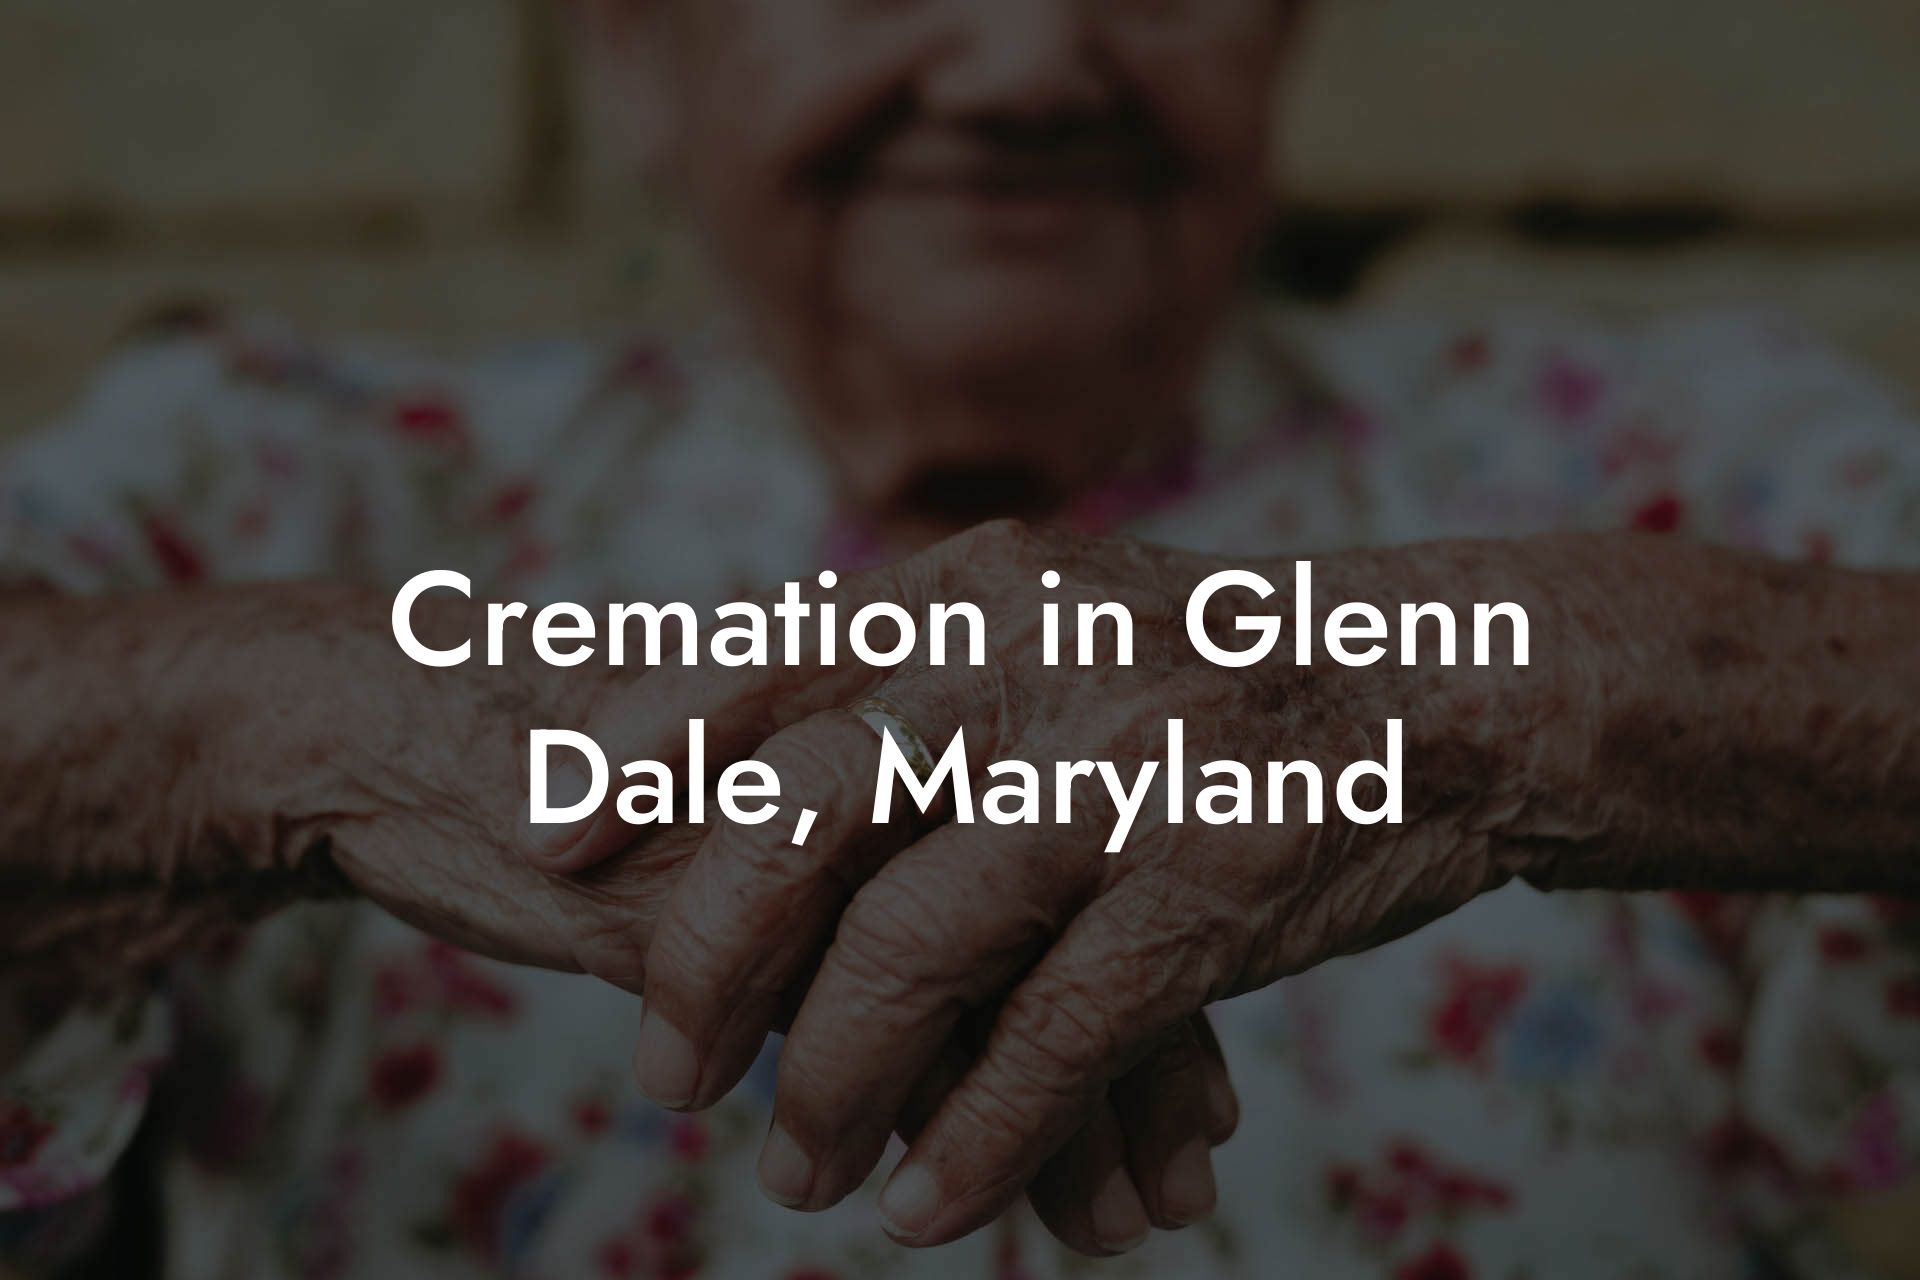 Cremation in Glenn Dale, Maryland